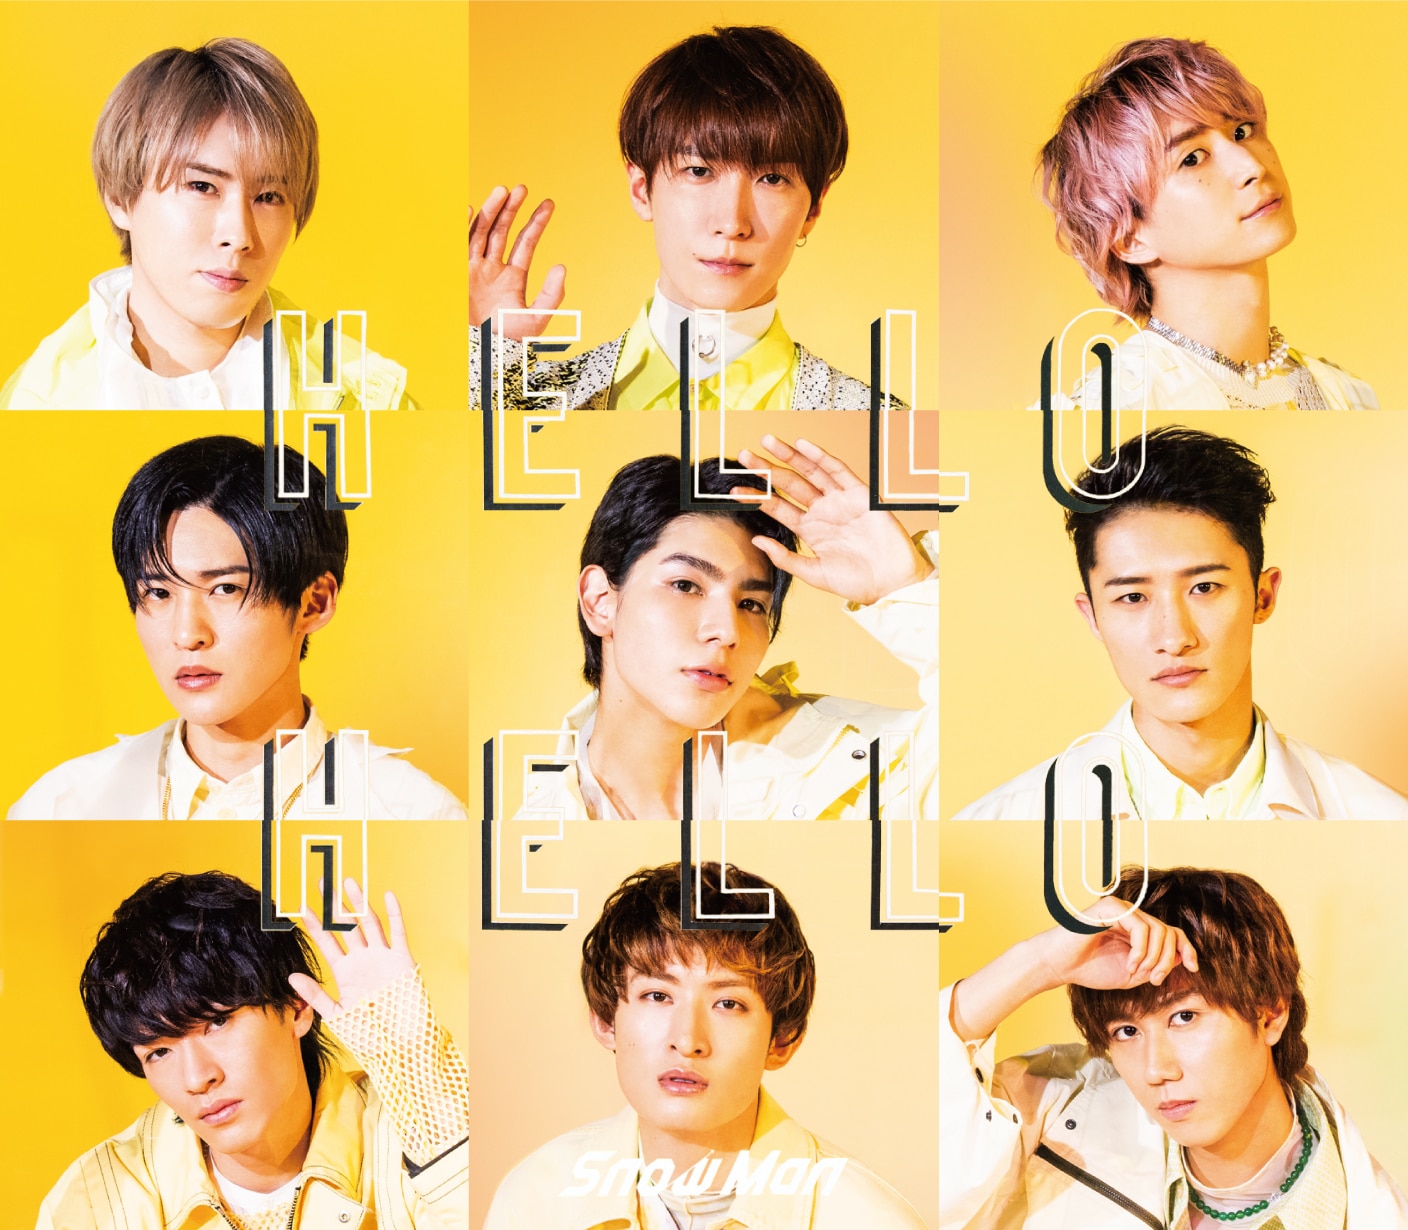 4th Single「HELLO HELLO」＜初回盤A＞ | エイベックス・ポータル 